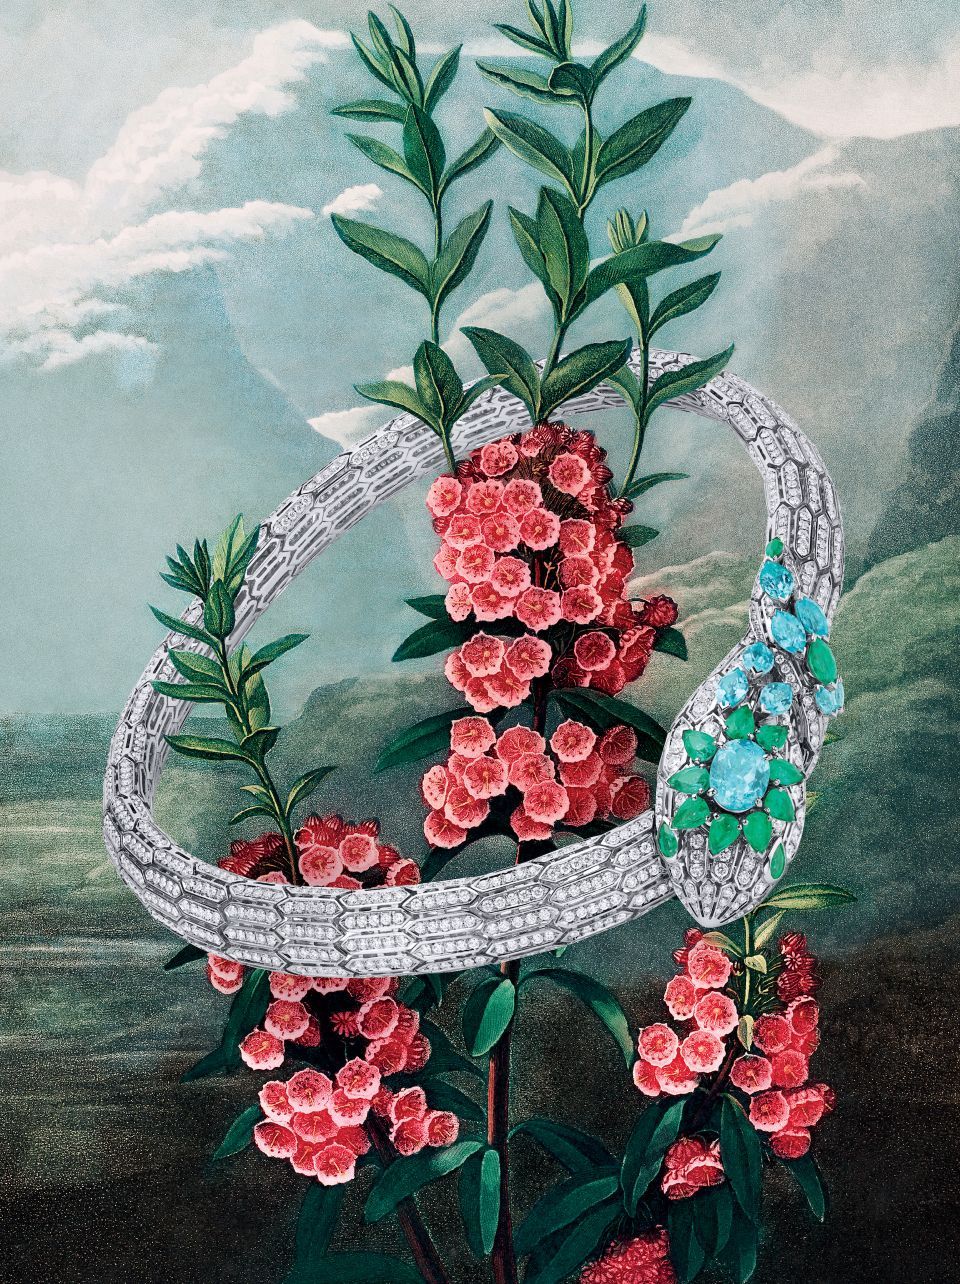 Bulgari Eden, The Garden of Wonders High Jewellery Collection